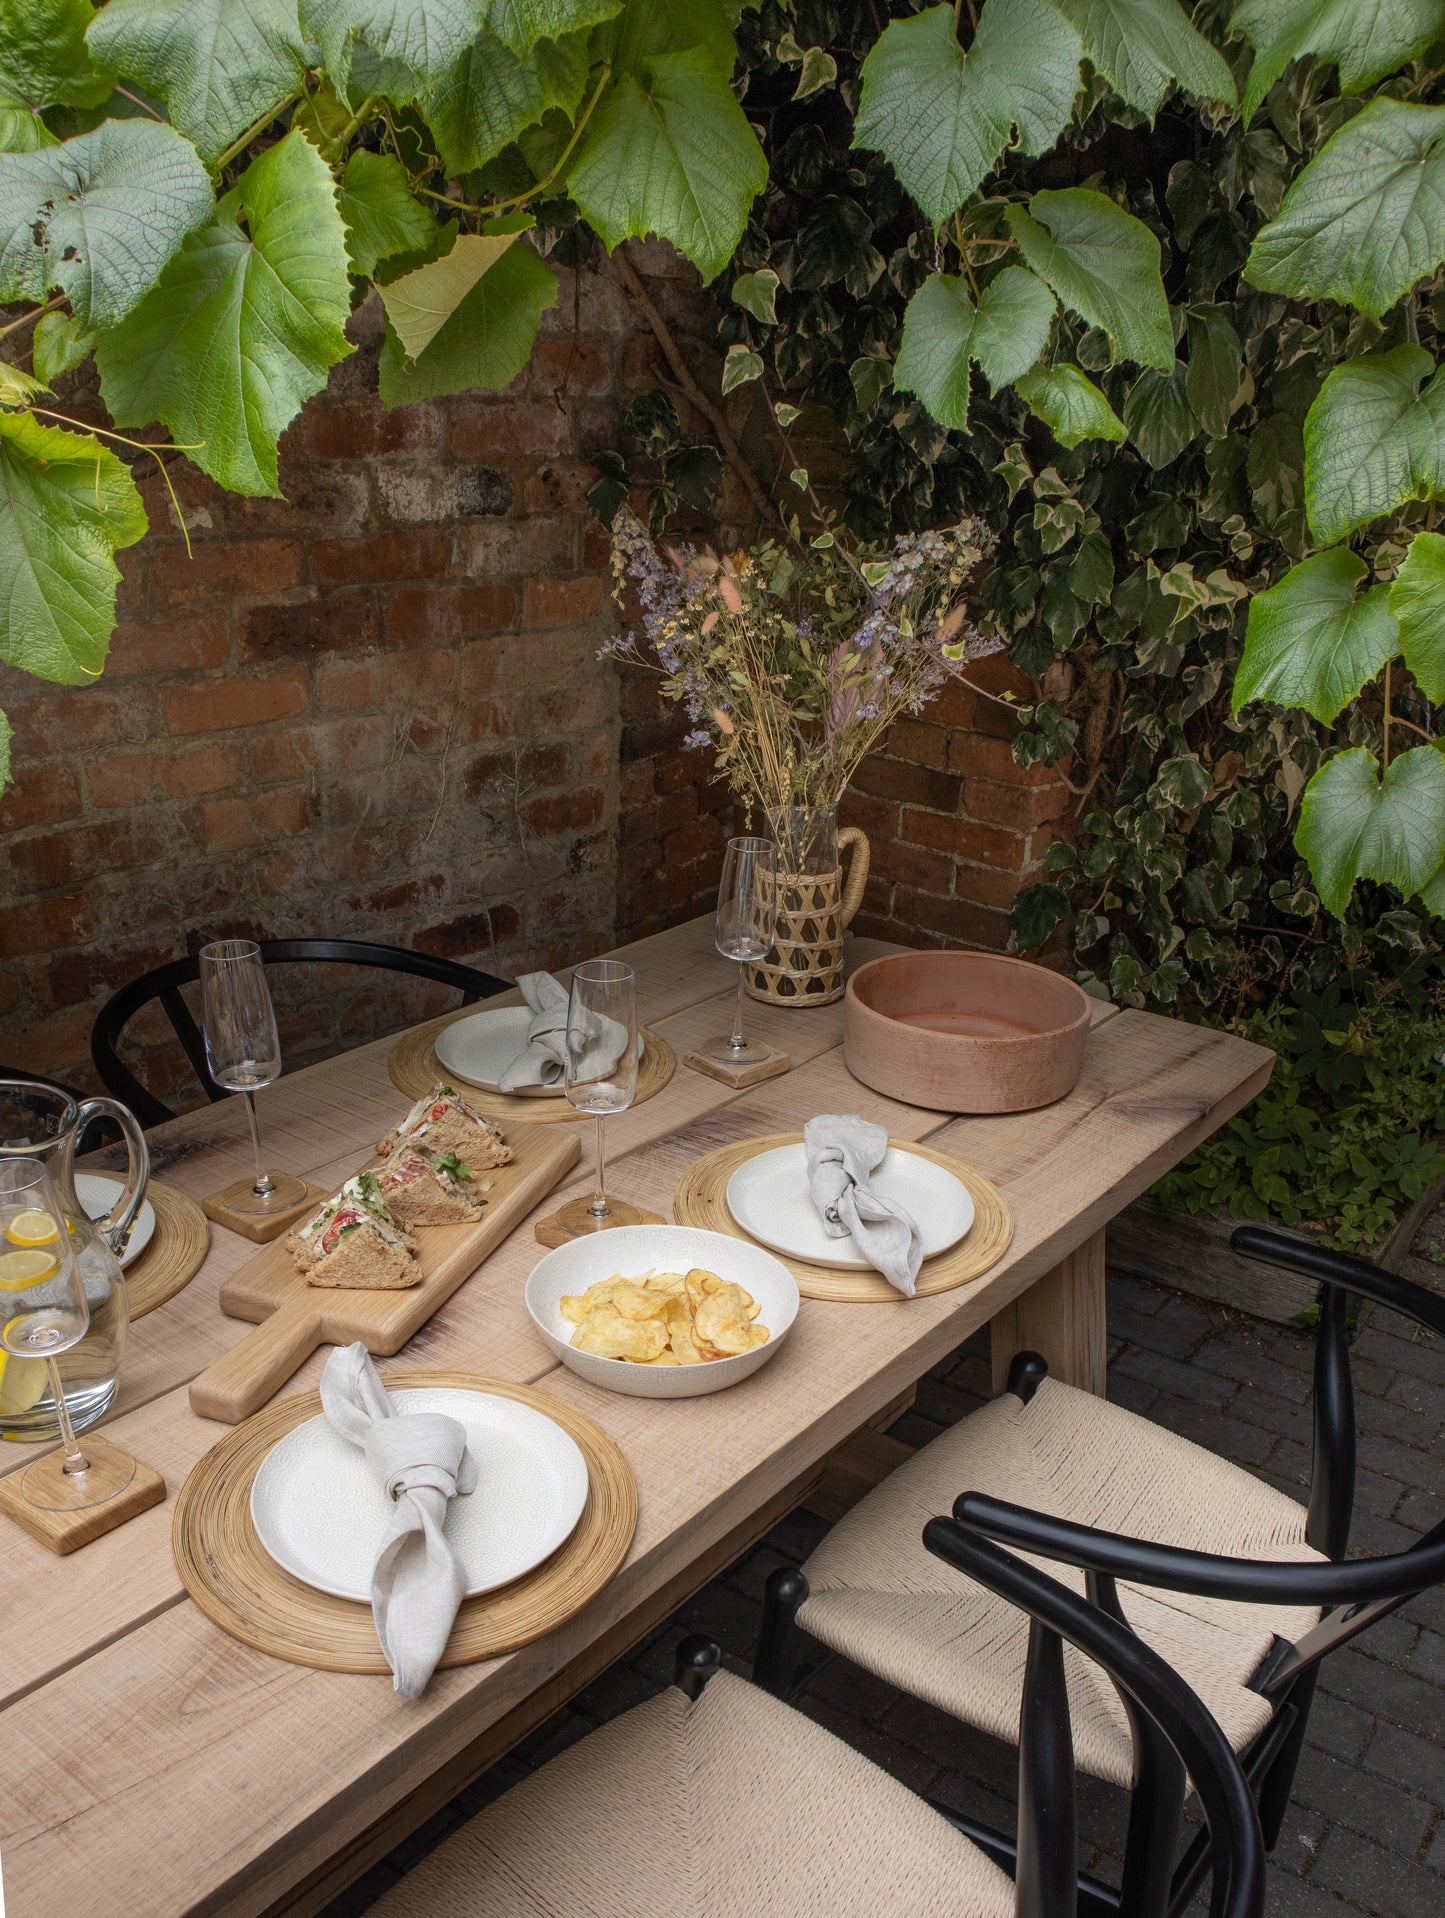 The Clover | Oak outdoor table